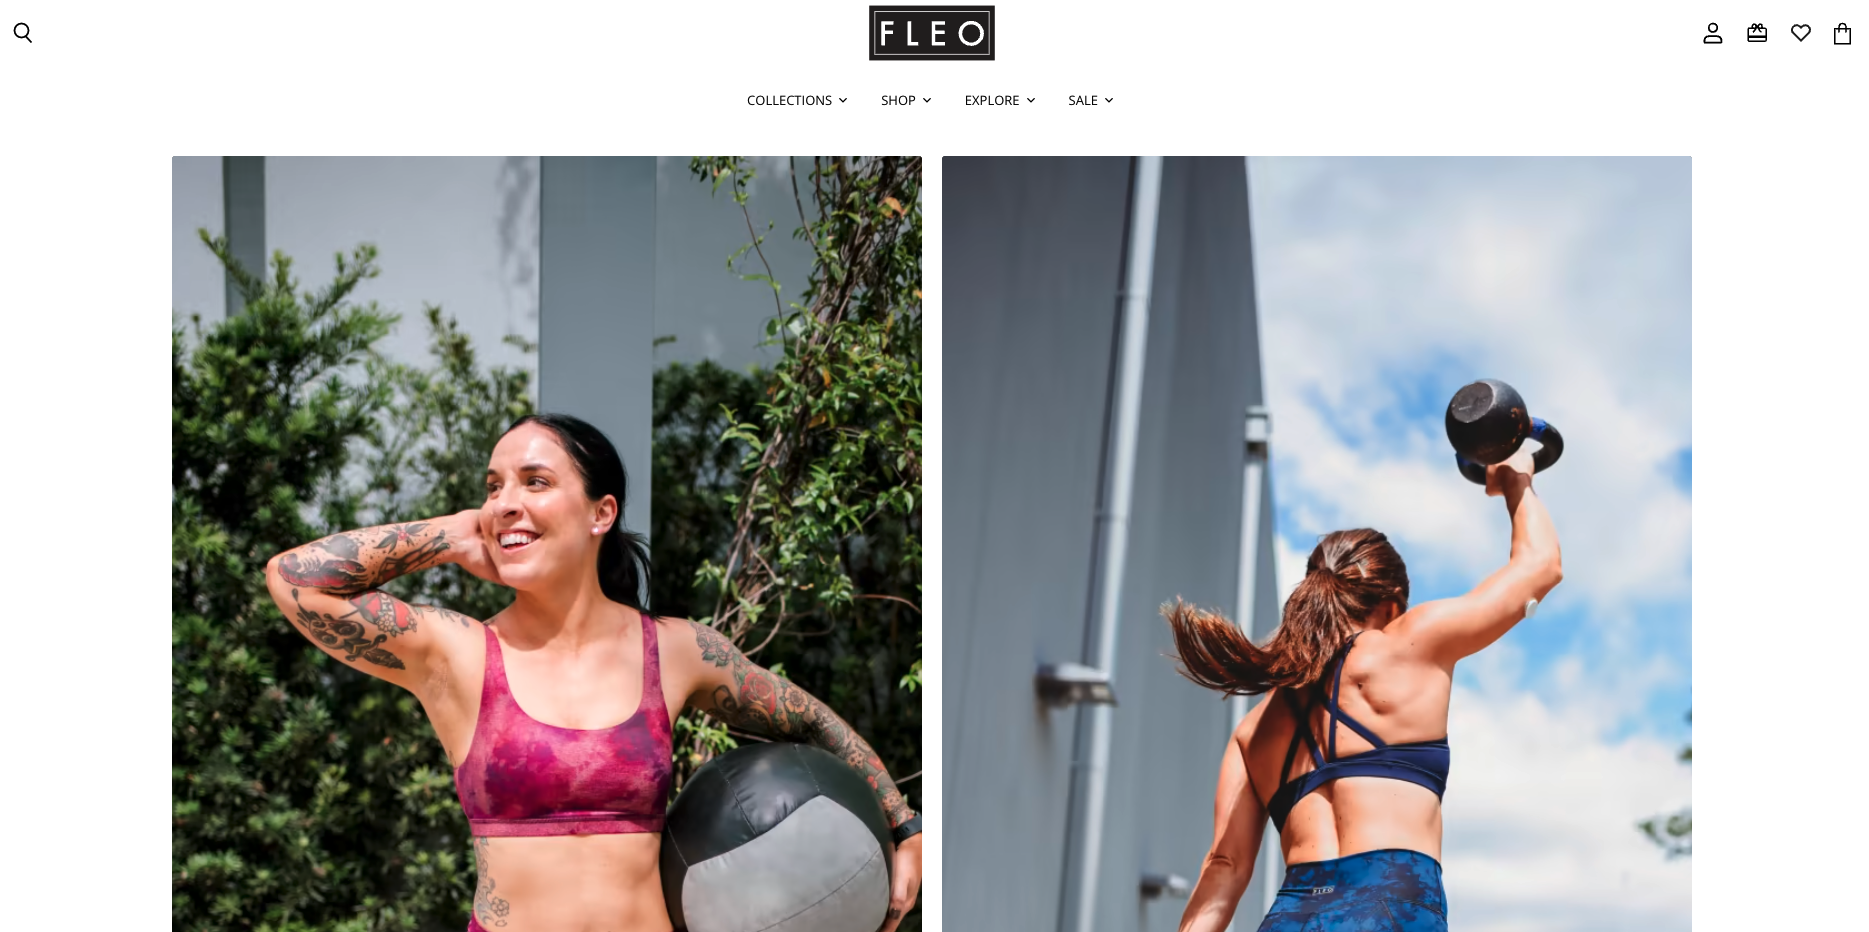 FLEO.com